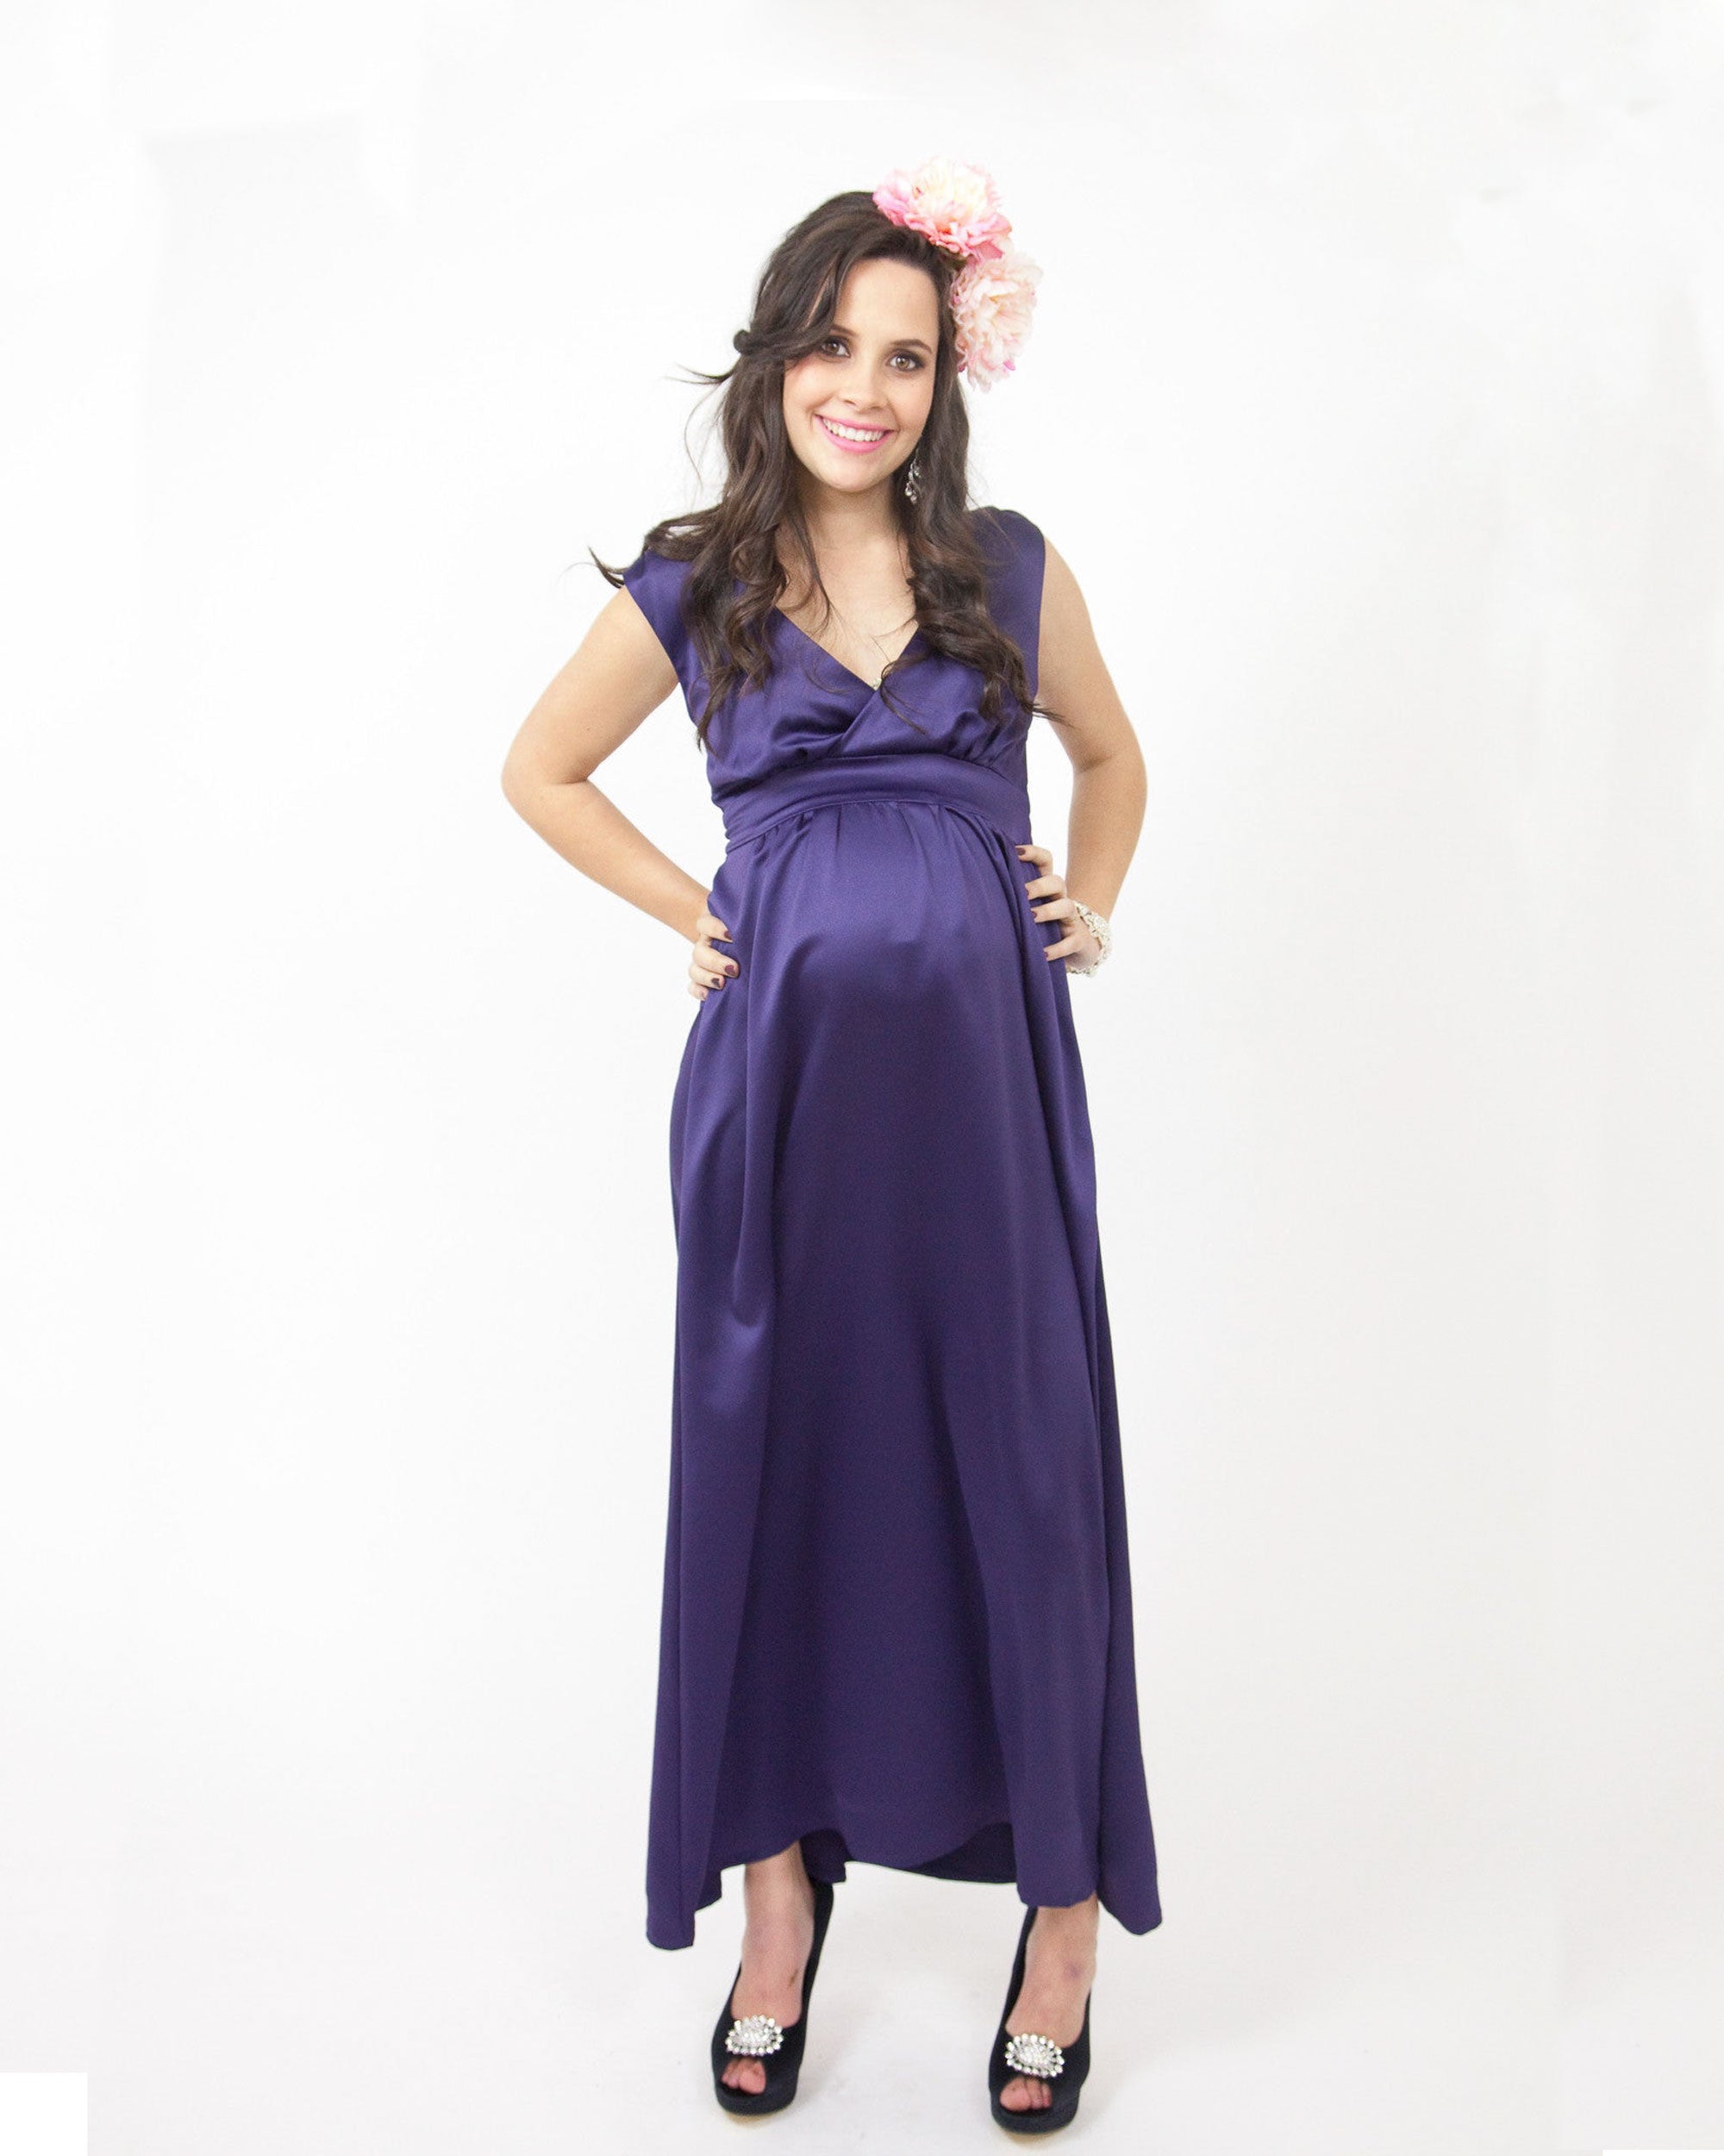 Charlotte Devereux 'Celebration' Maternity Formal Dress - Damson Purple